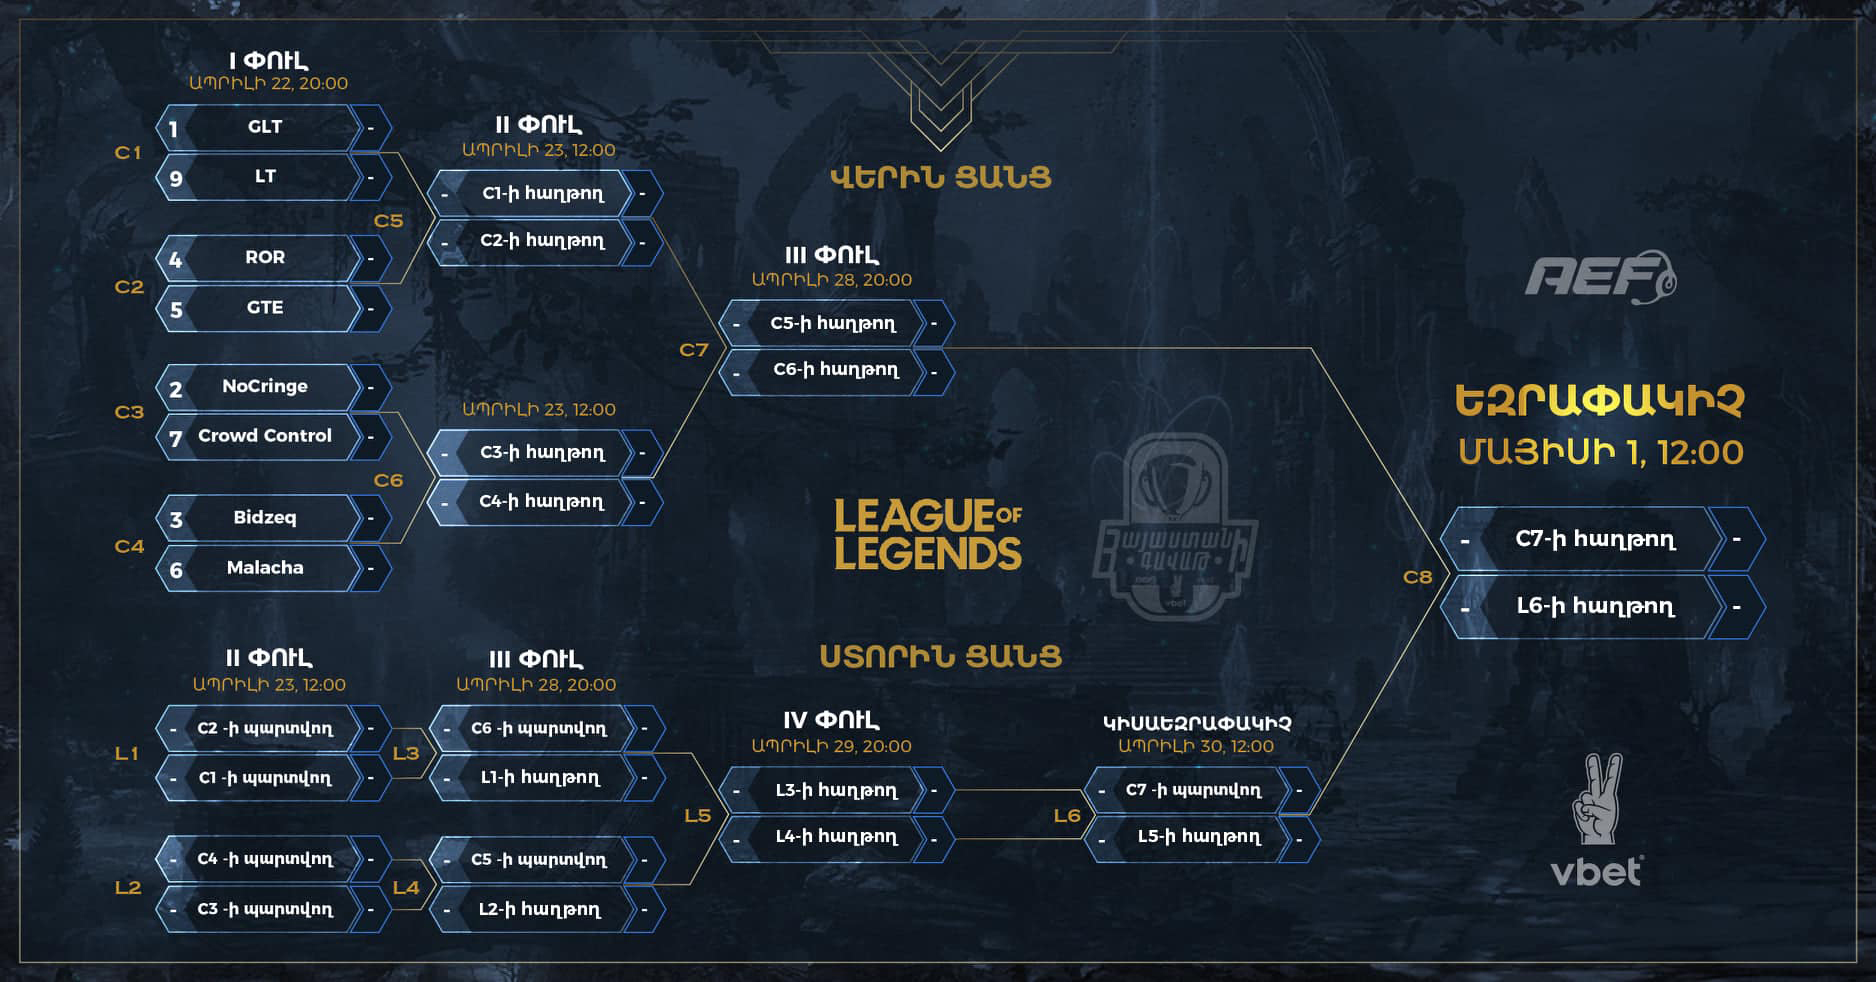 League of Legends tournament's competition table